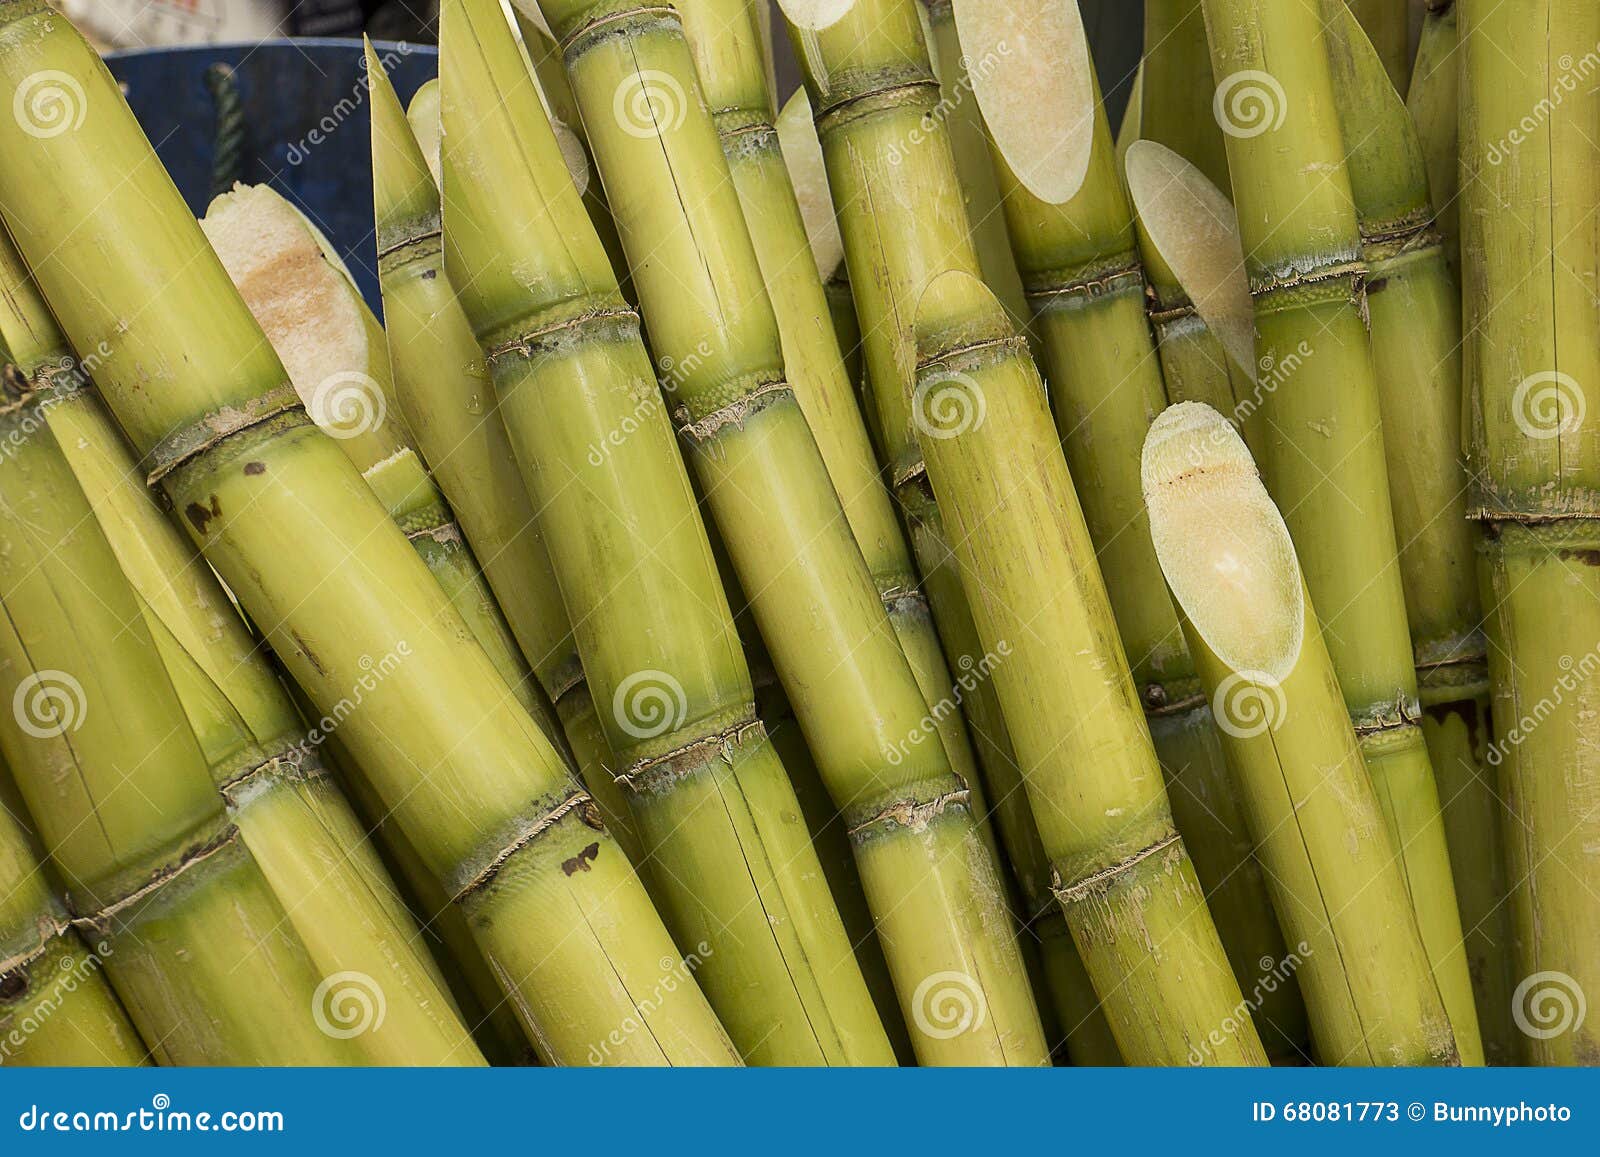 stalks of sugarcane